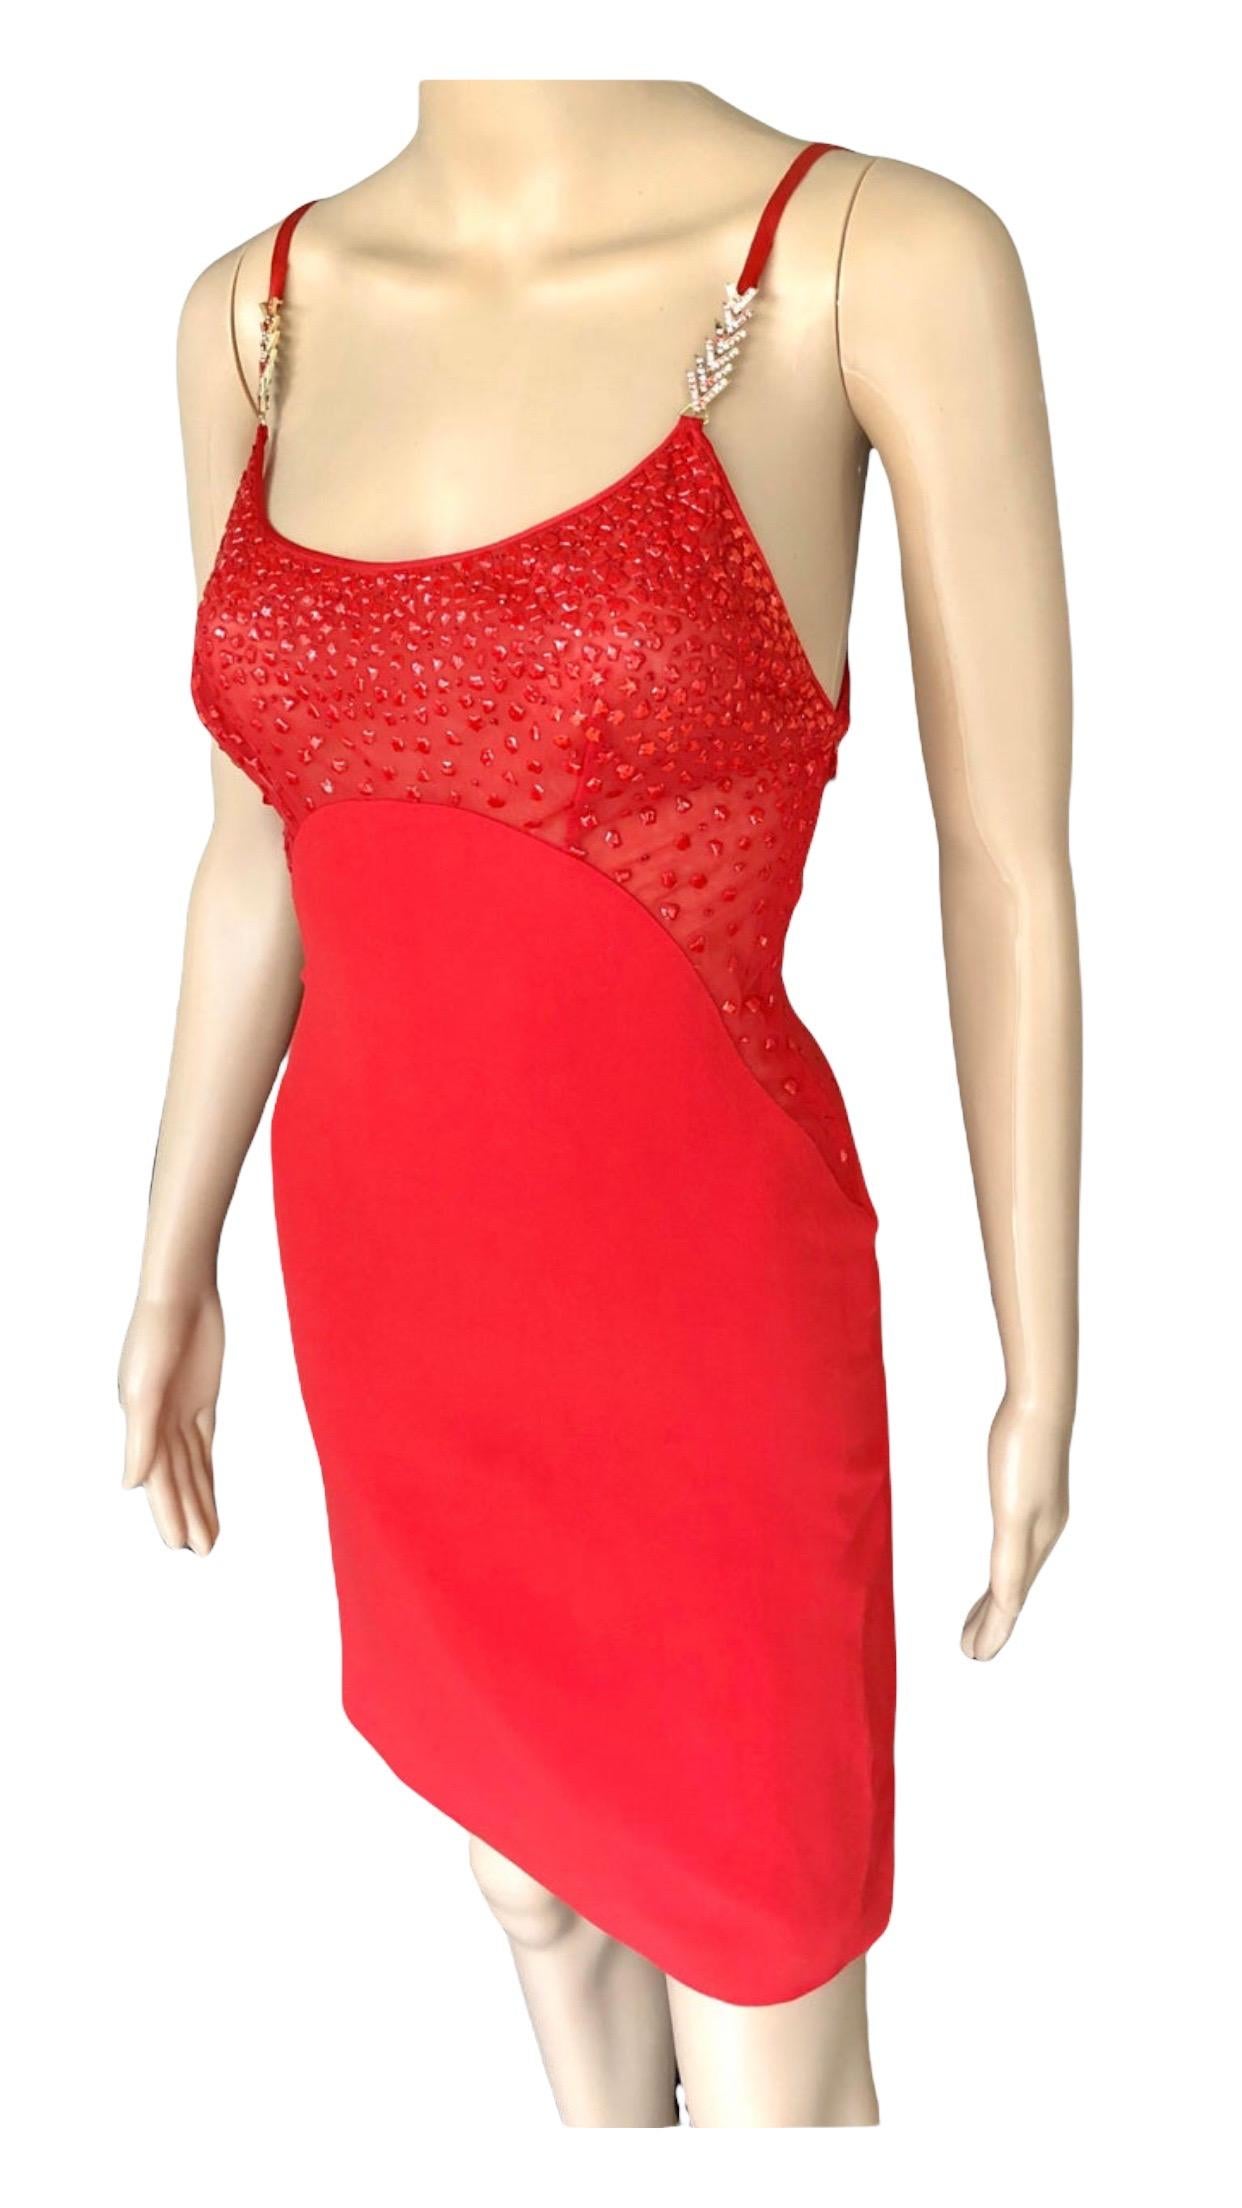 Gianni Versace F/W 1996 Runway Vintage Embellished Sheer Red Evening Mini Dress  For Sale 10